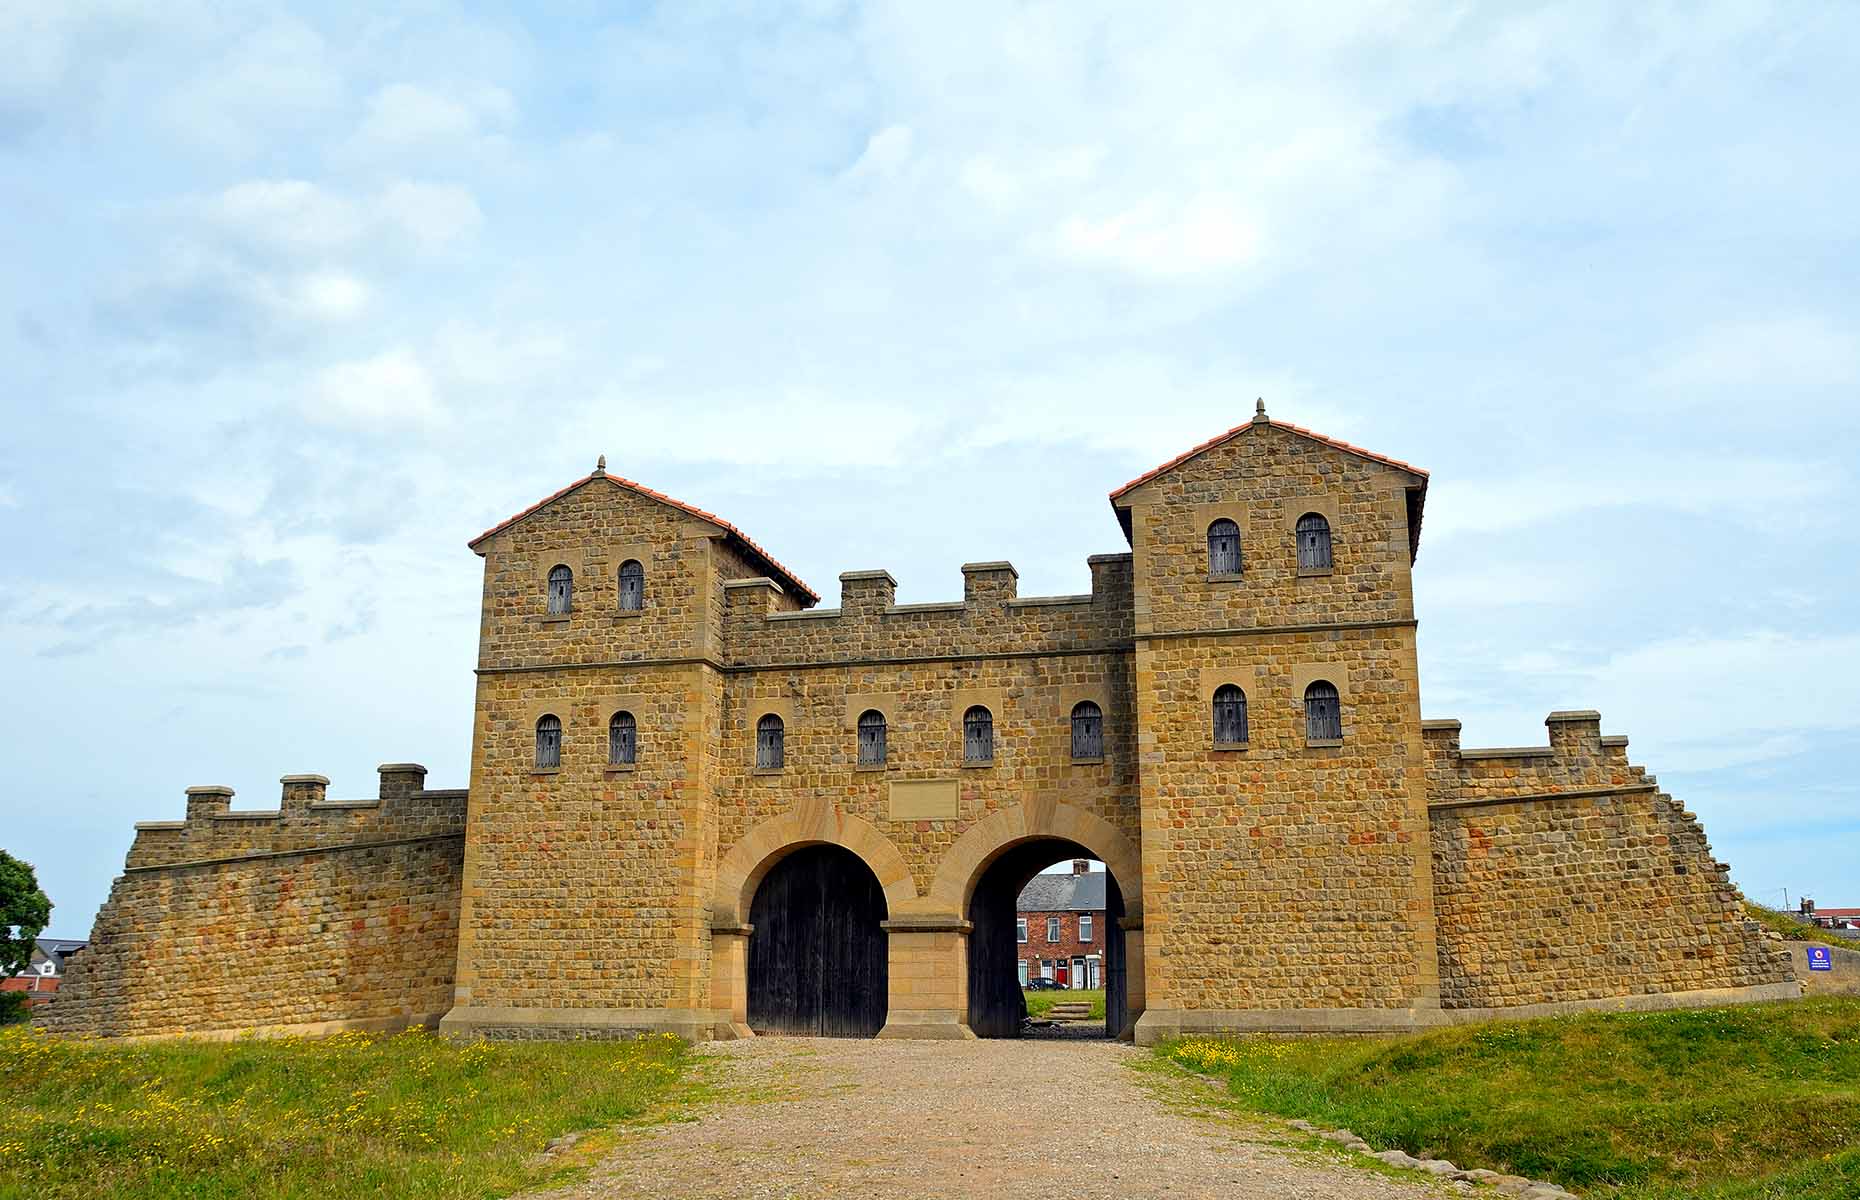 Arbeia South Shields Roman Fort (Image: Attila JANDI/Shutterstock)